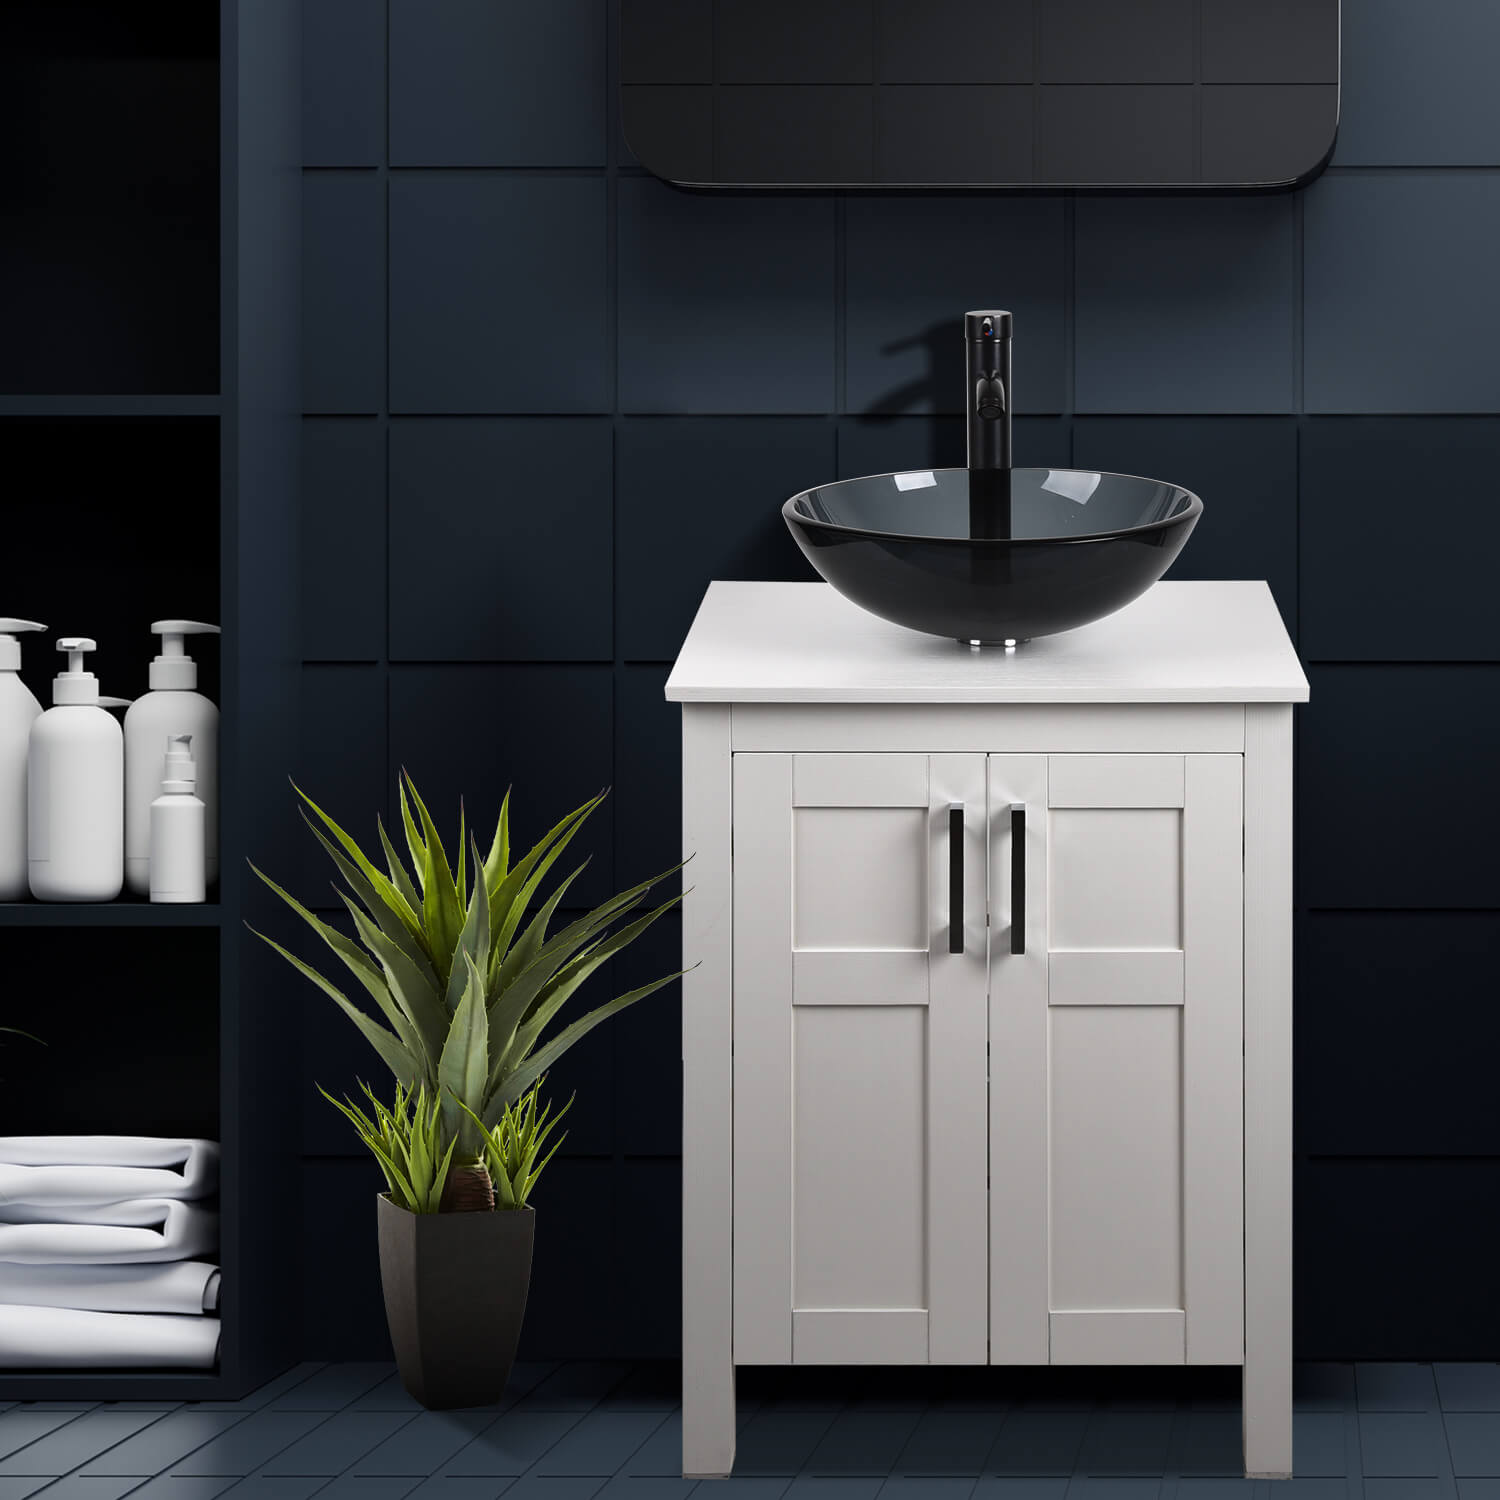 Elecwish White Bathroom Vanity and Bluish Grey Sink Set HW1120-WH display scene